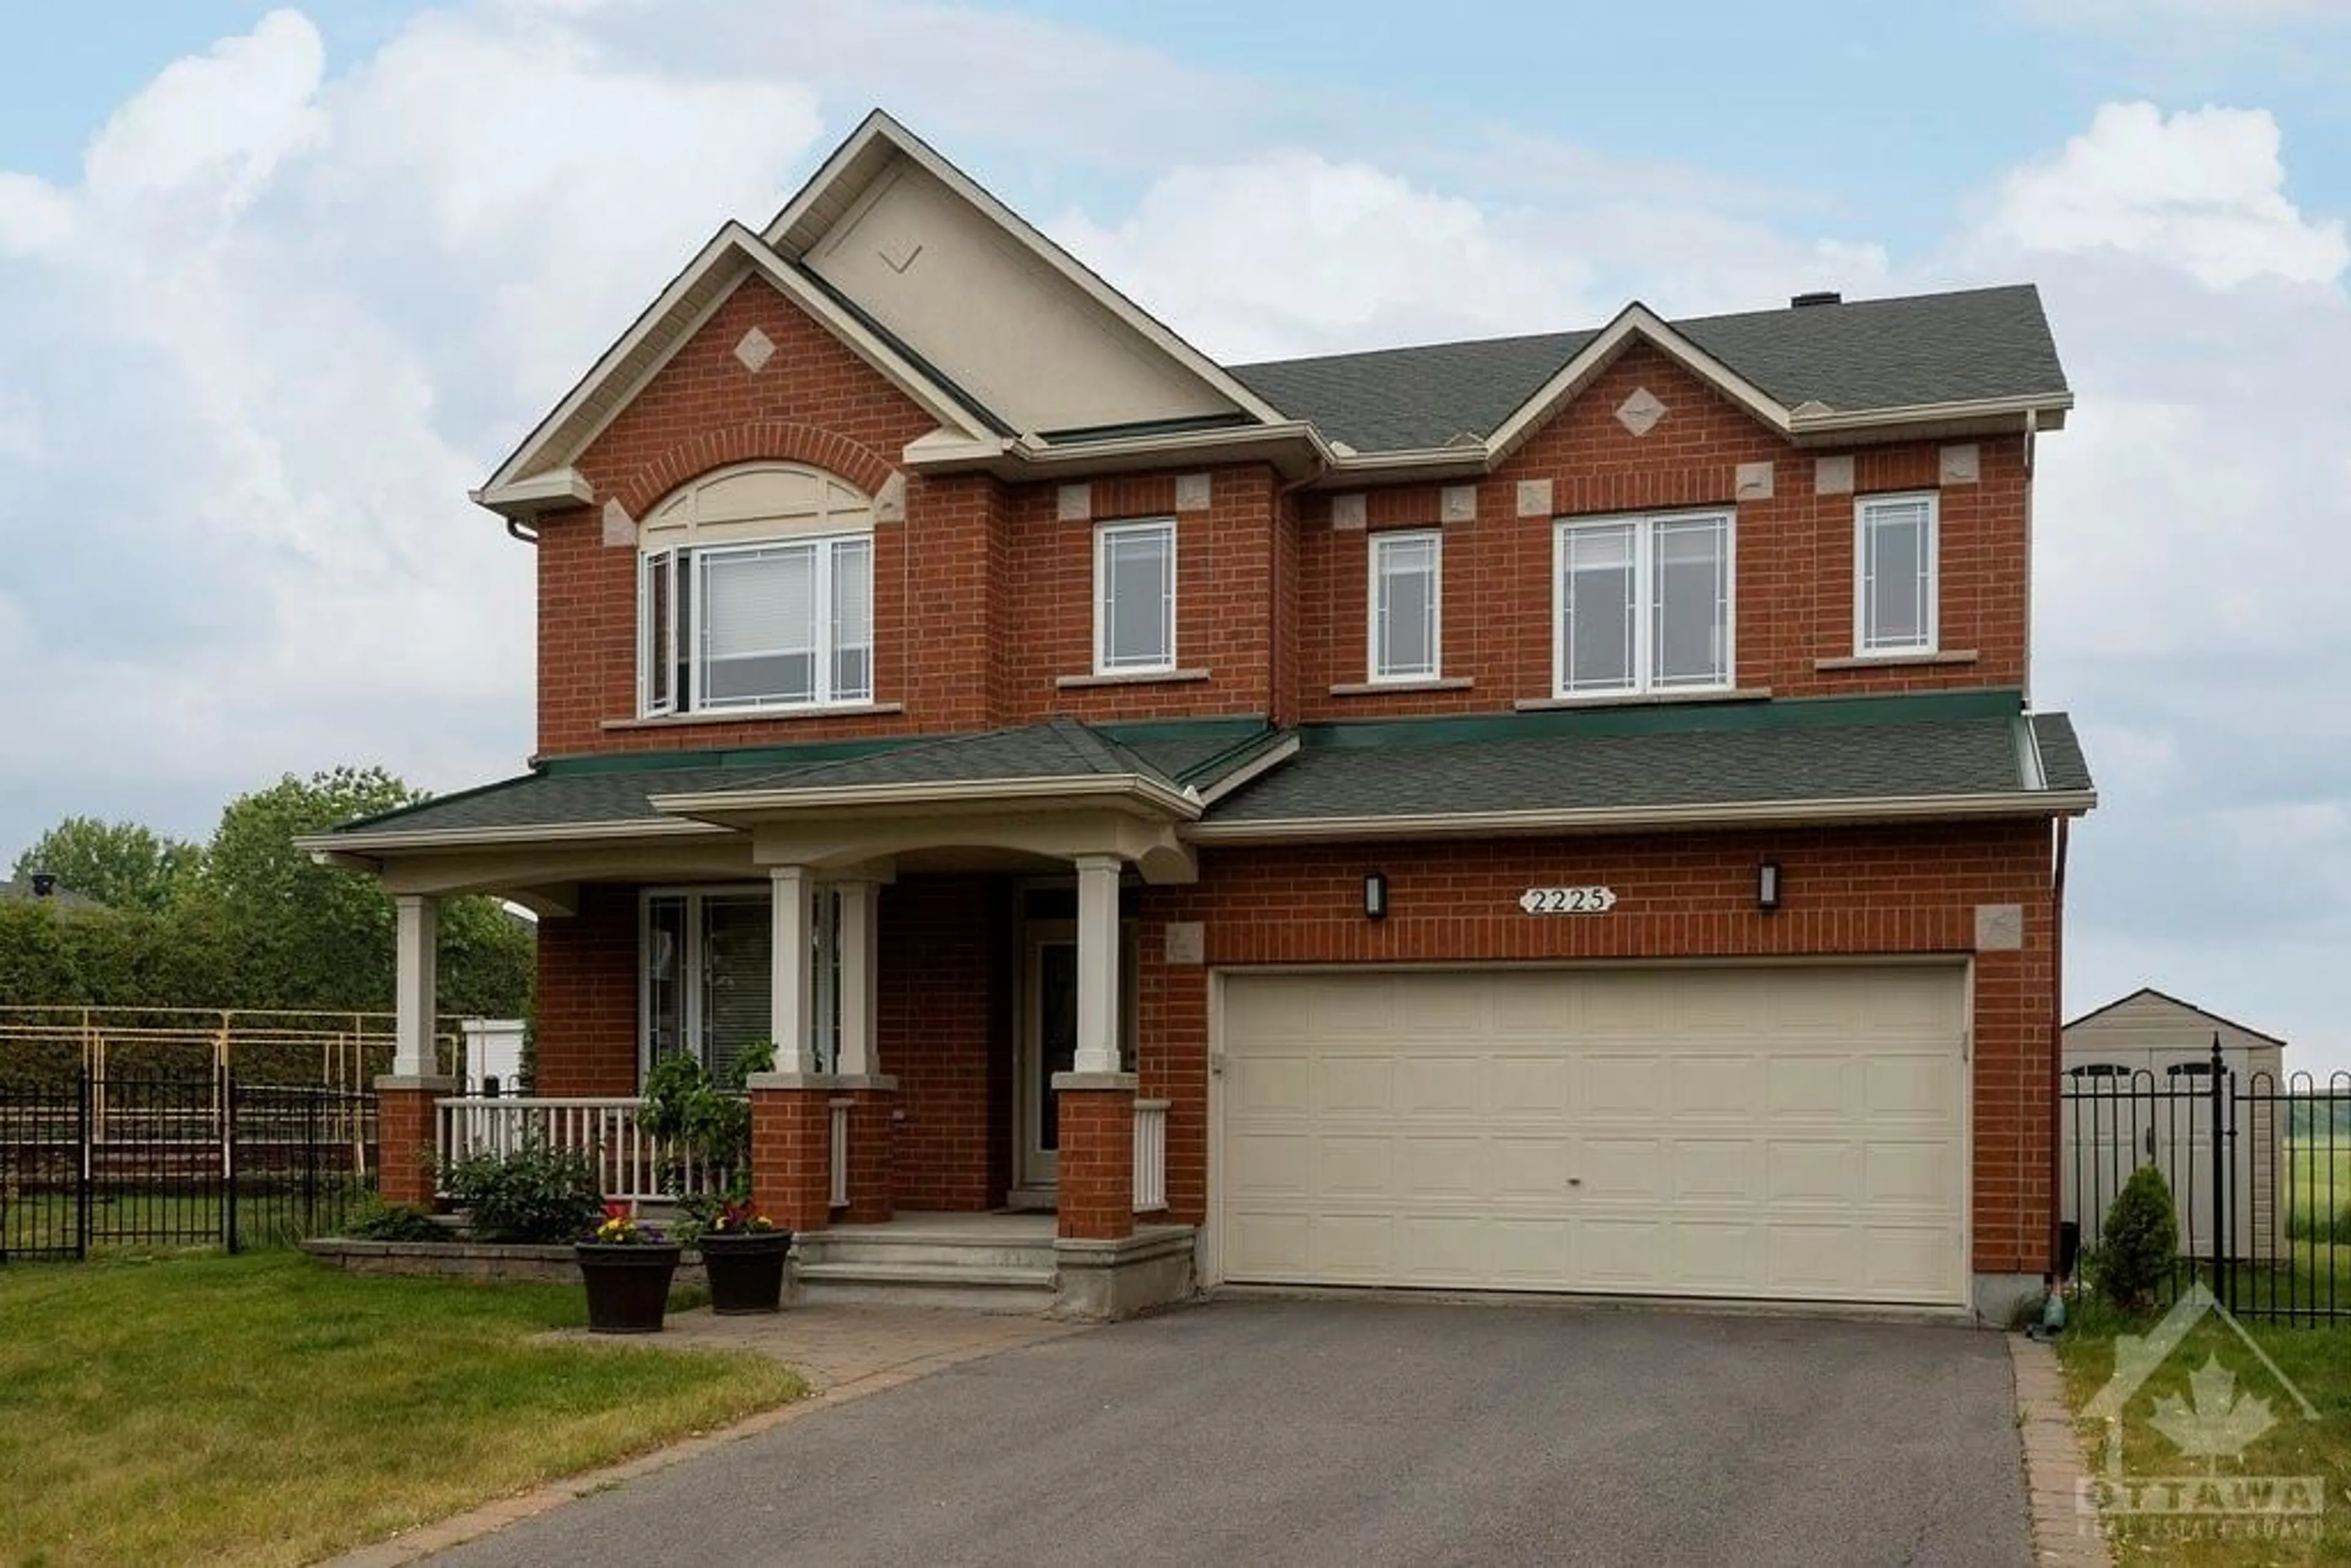 Home with brick exterior material for 2225 SANDMAN Cres, Ottawa Ontario K4A 4V6